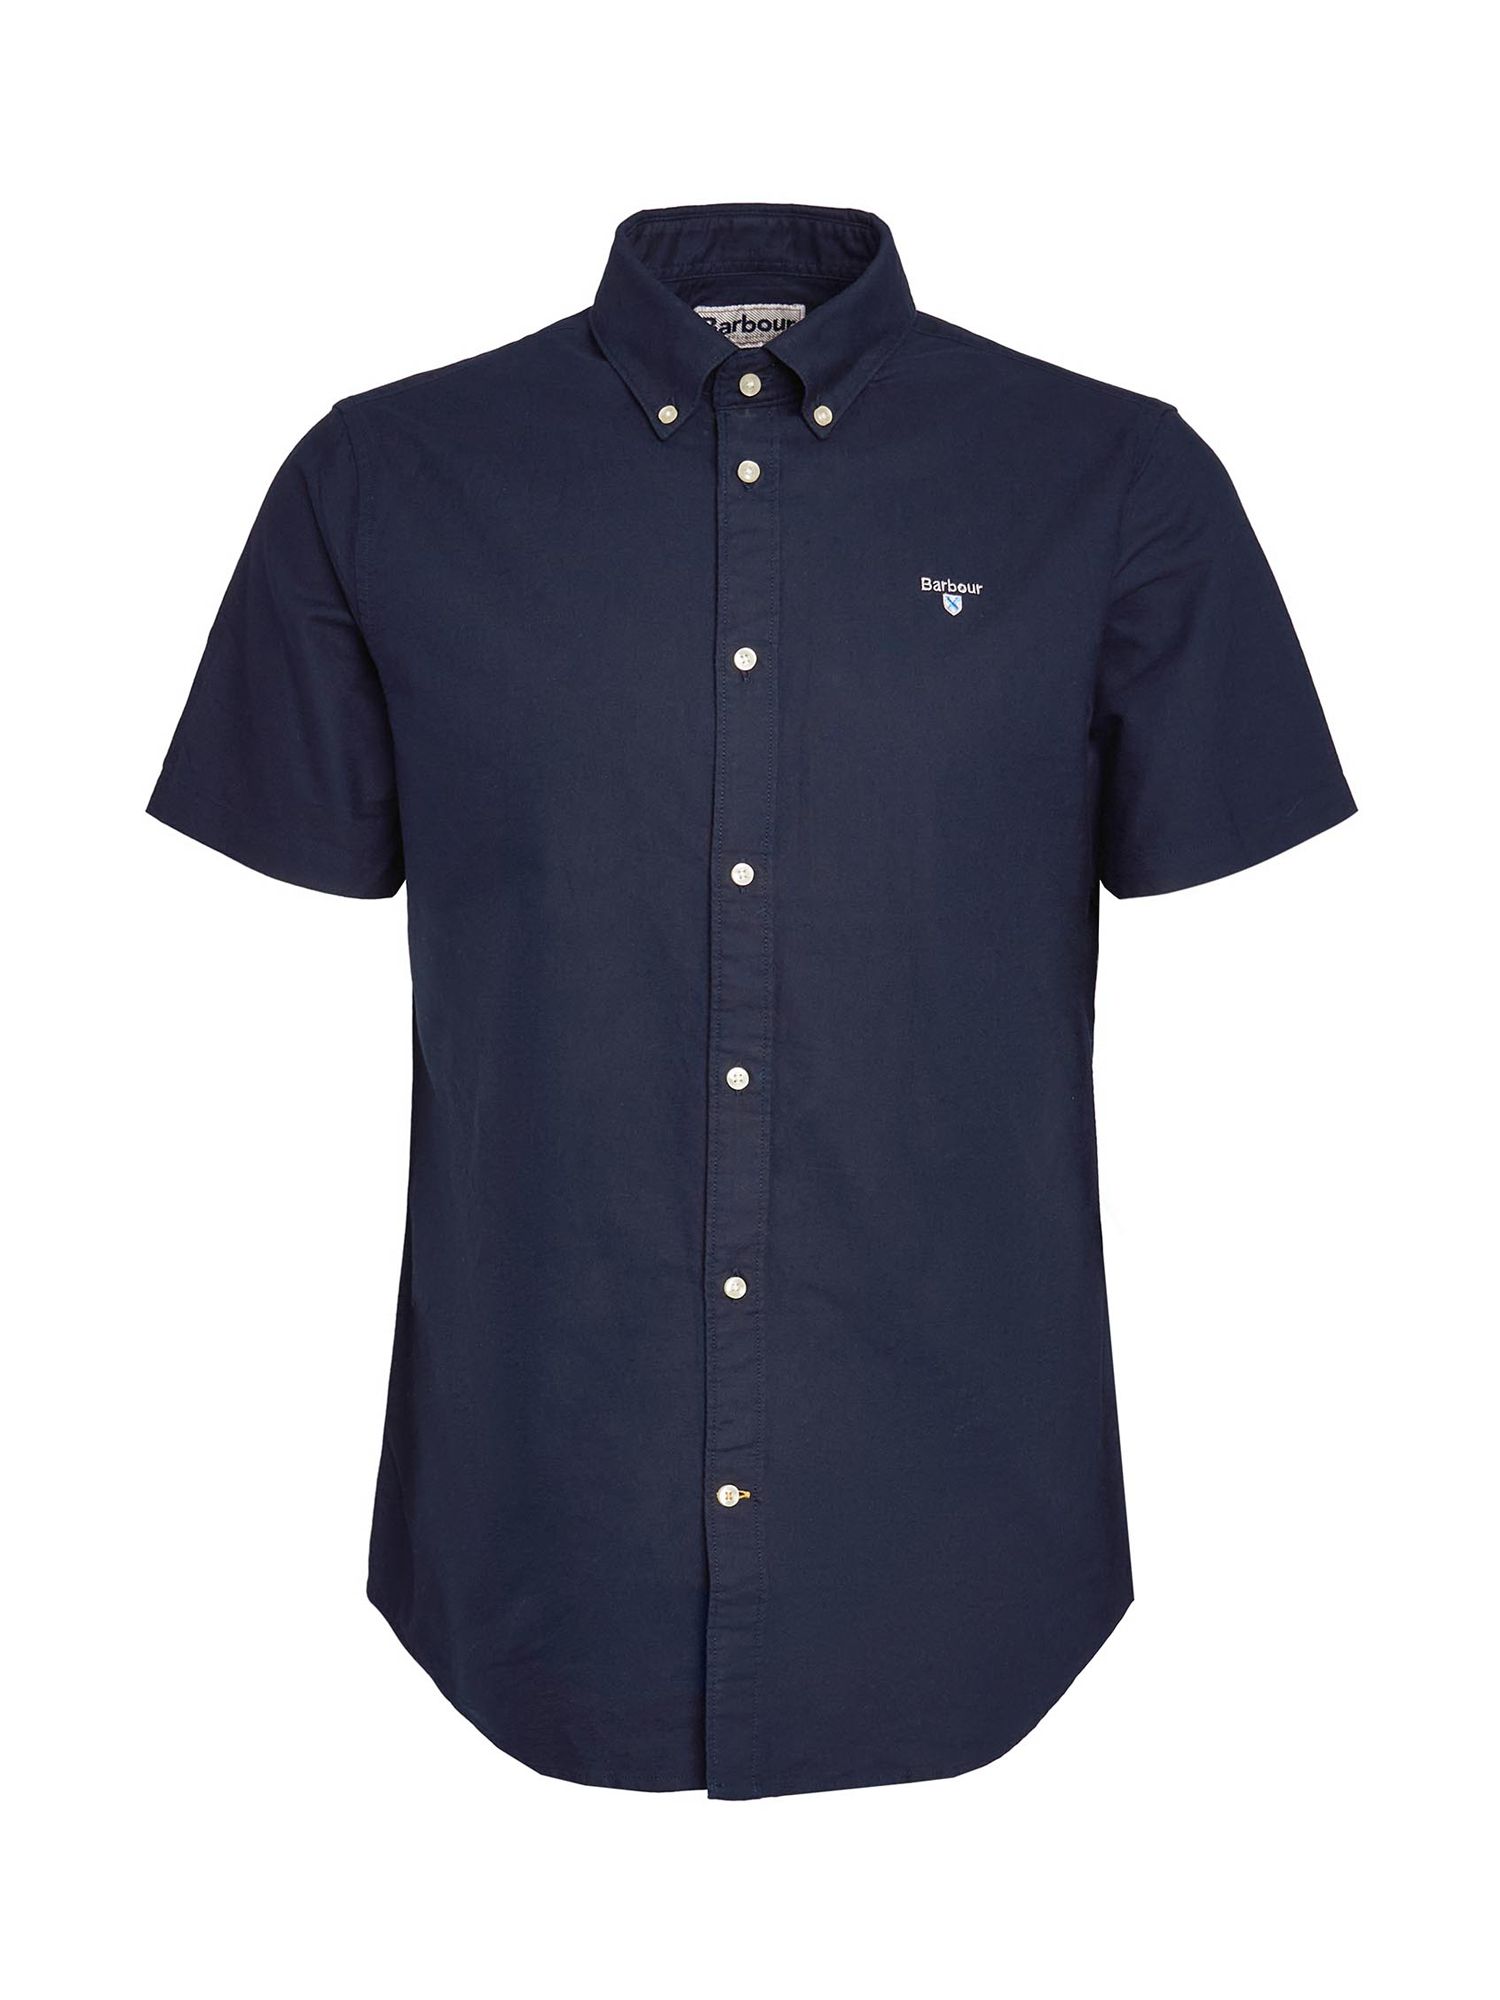 Barbour Oxford Cotton Short Sleeve Shirt, Navy at John Lewis & Partners